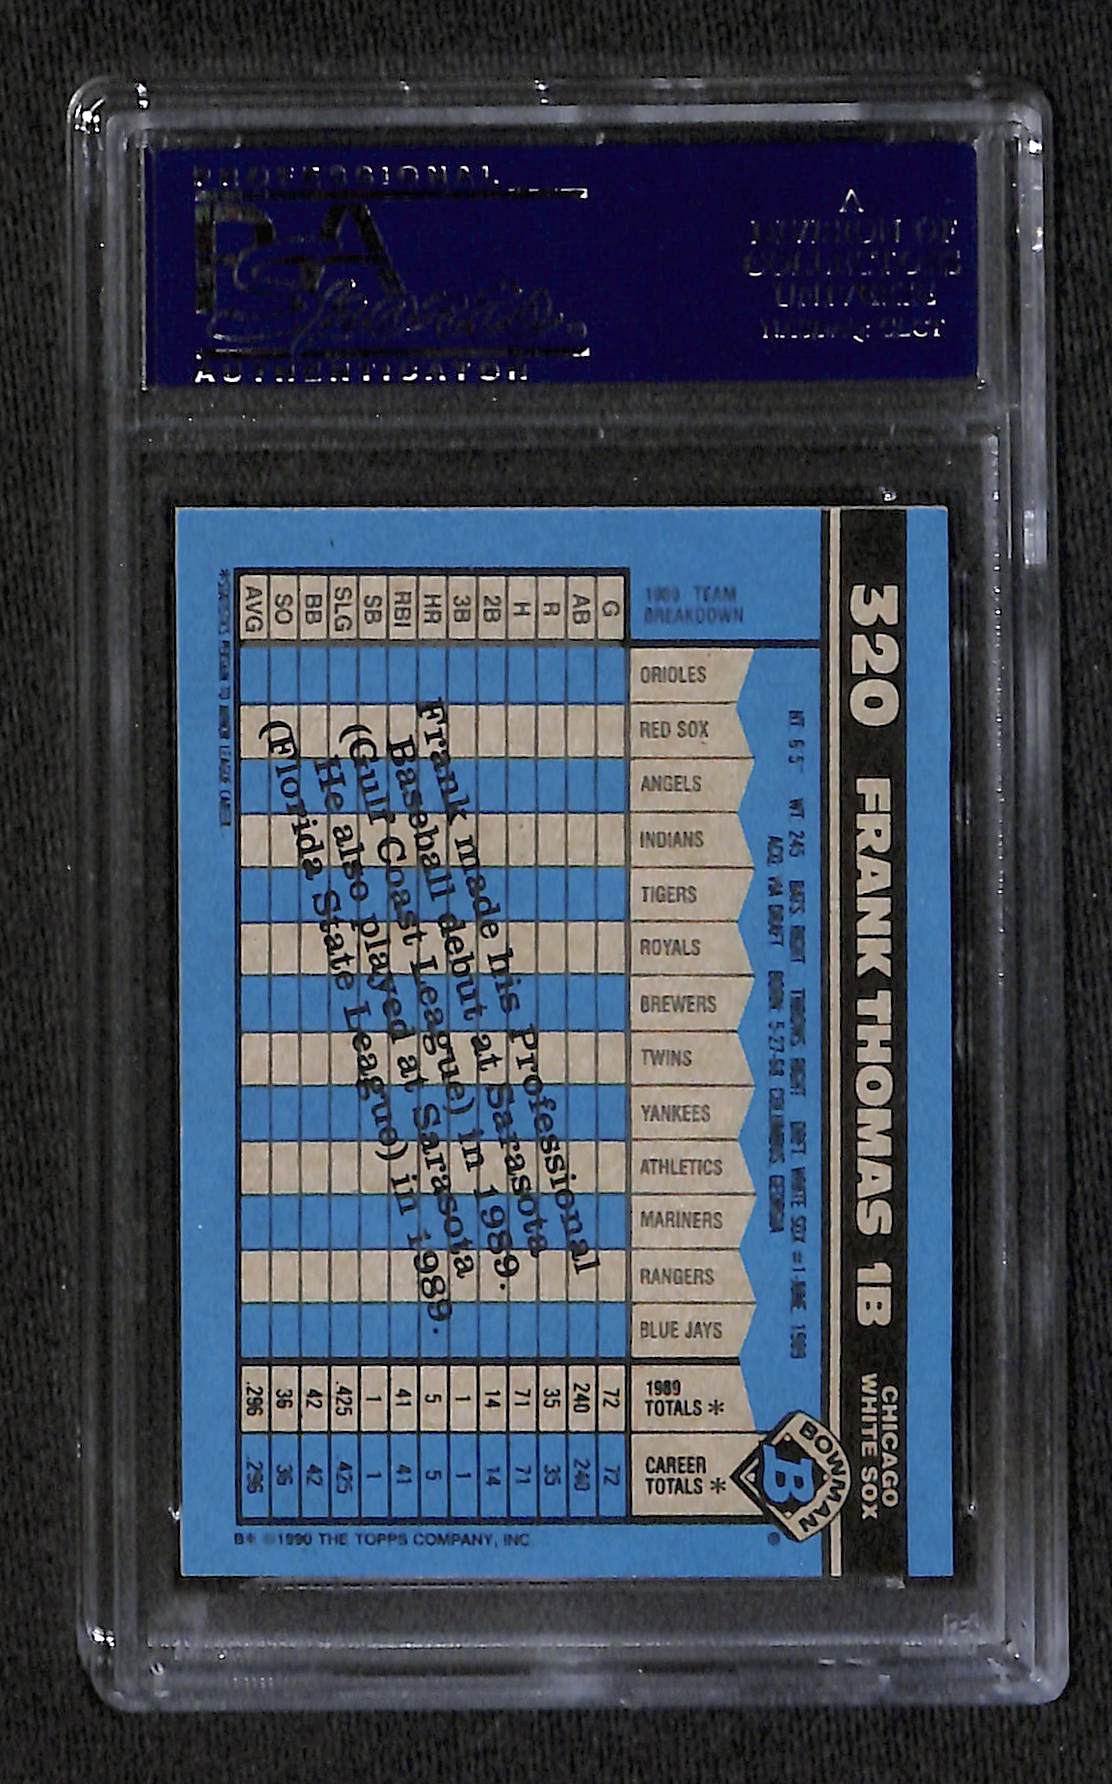 1990 BOWMAN FRANK THOMAS ROOKIE RC CARD AUTO PSA DNA ITP (2282)